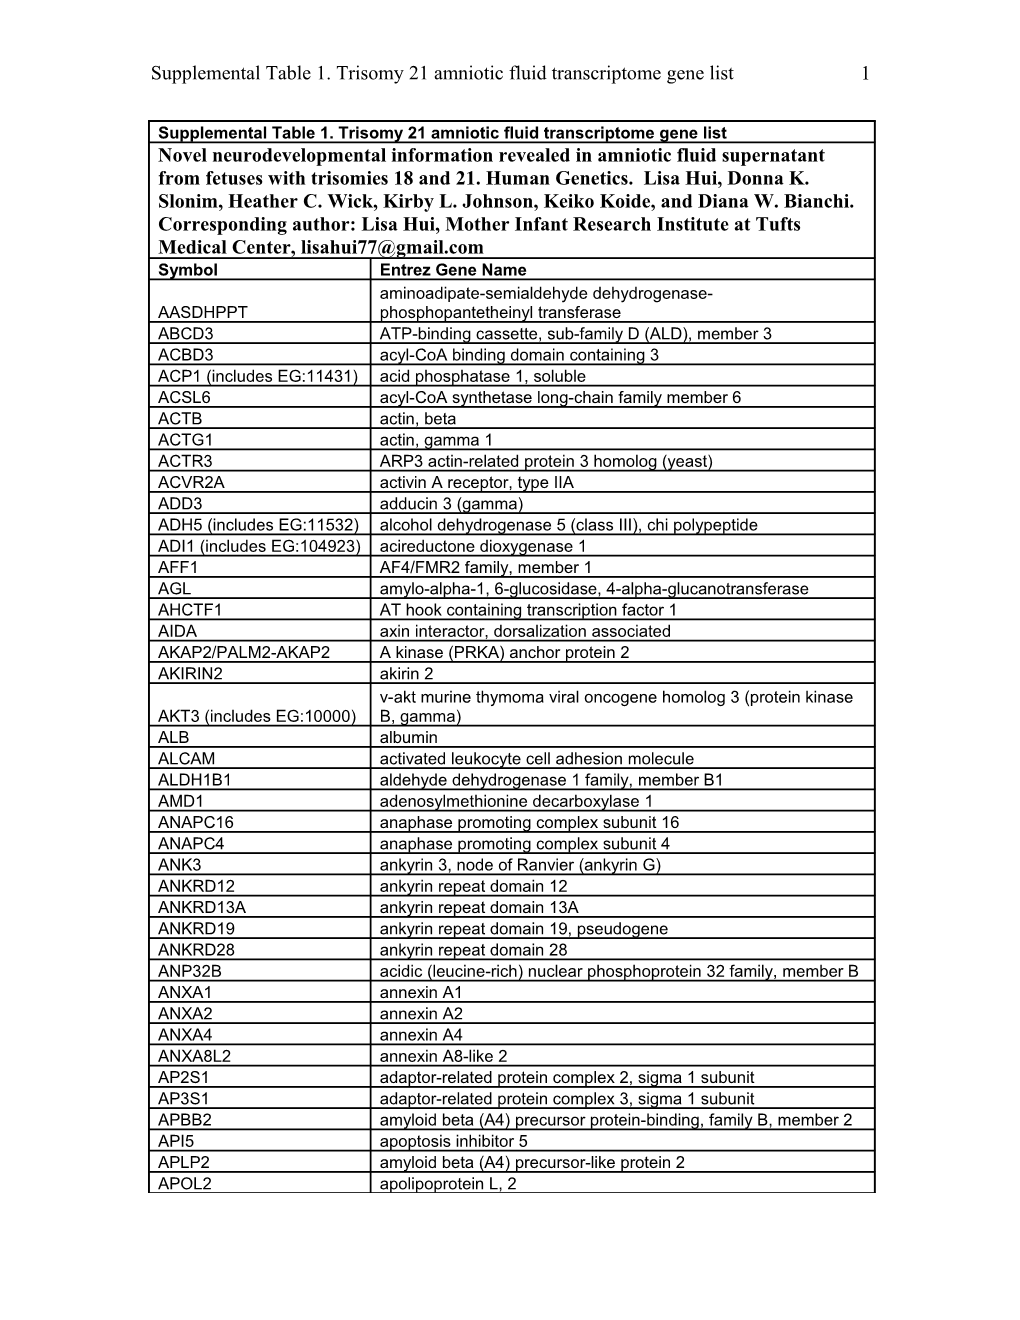 Supplemental Table 1. Trisomy 21 Amniotic Fluid Transcriptome Gene List